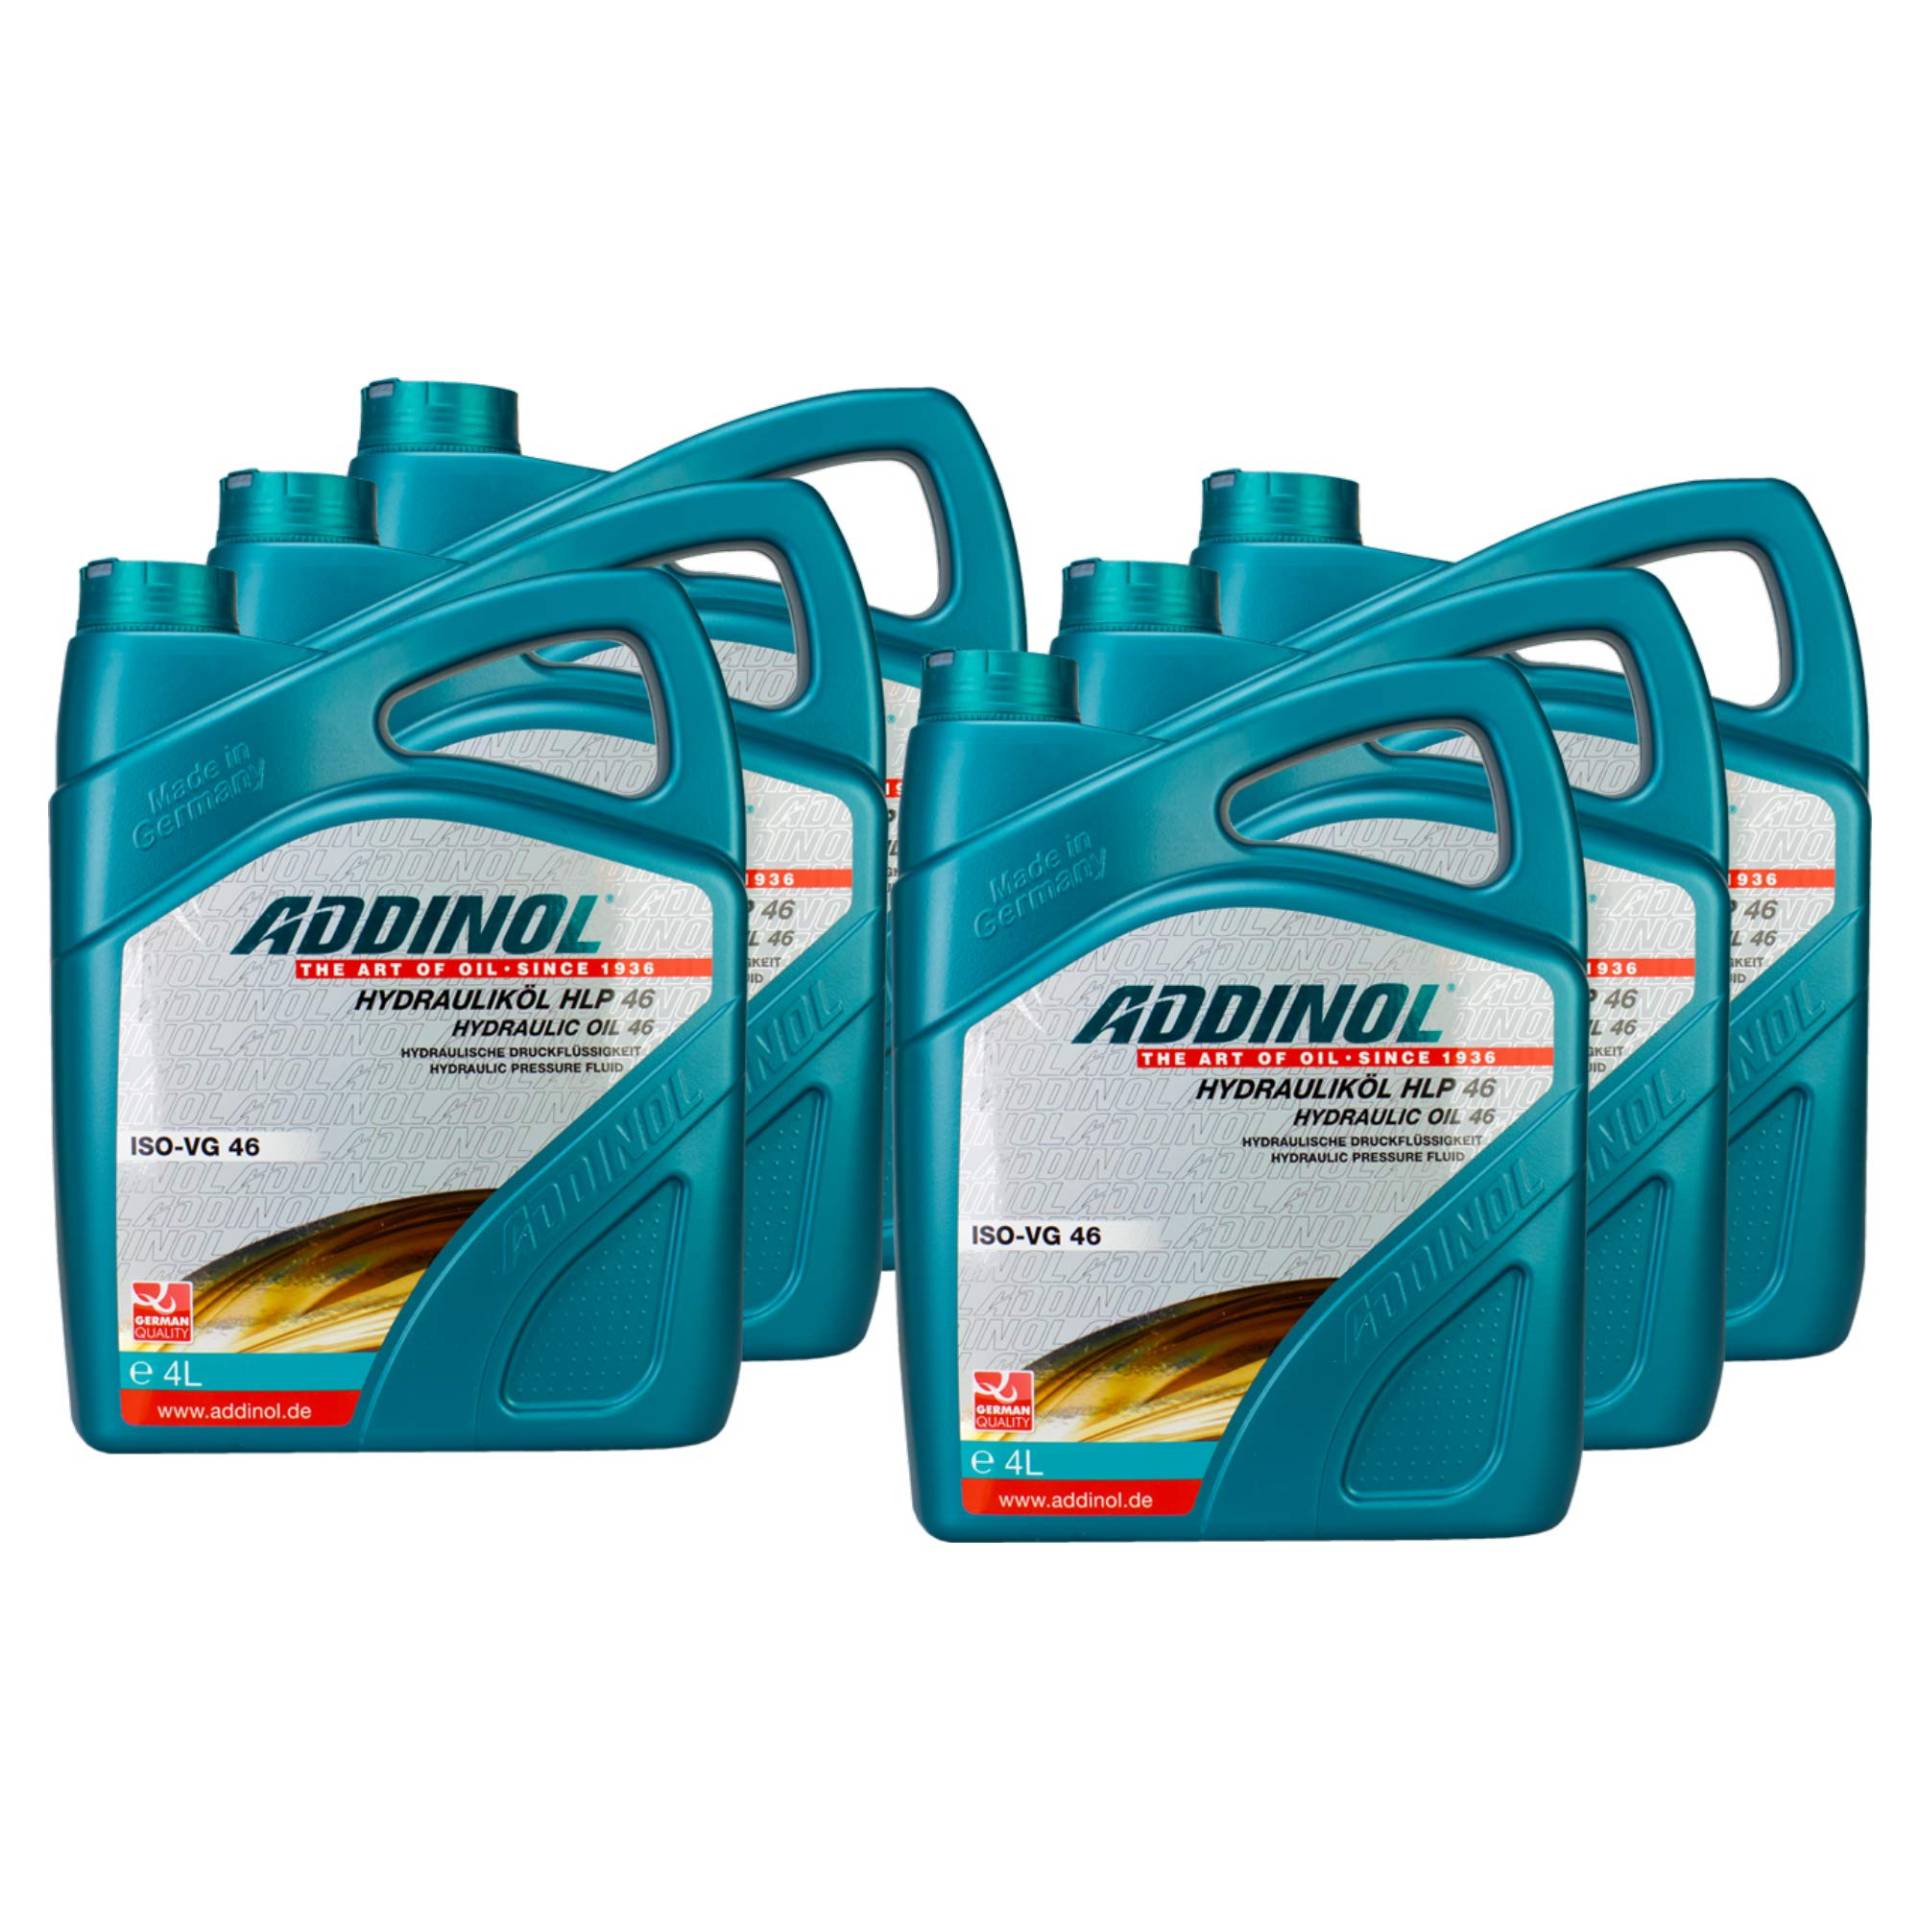 6X Addinol Hydrauliköl Hydraulic Oil Fluid Hlp 46 4L 73200425 von Addinol